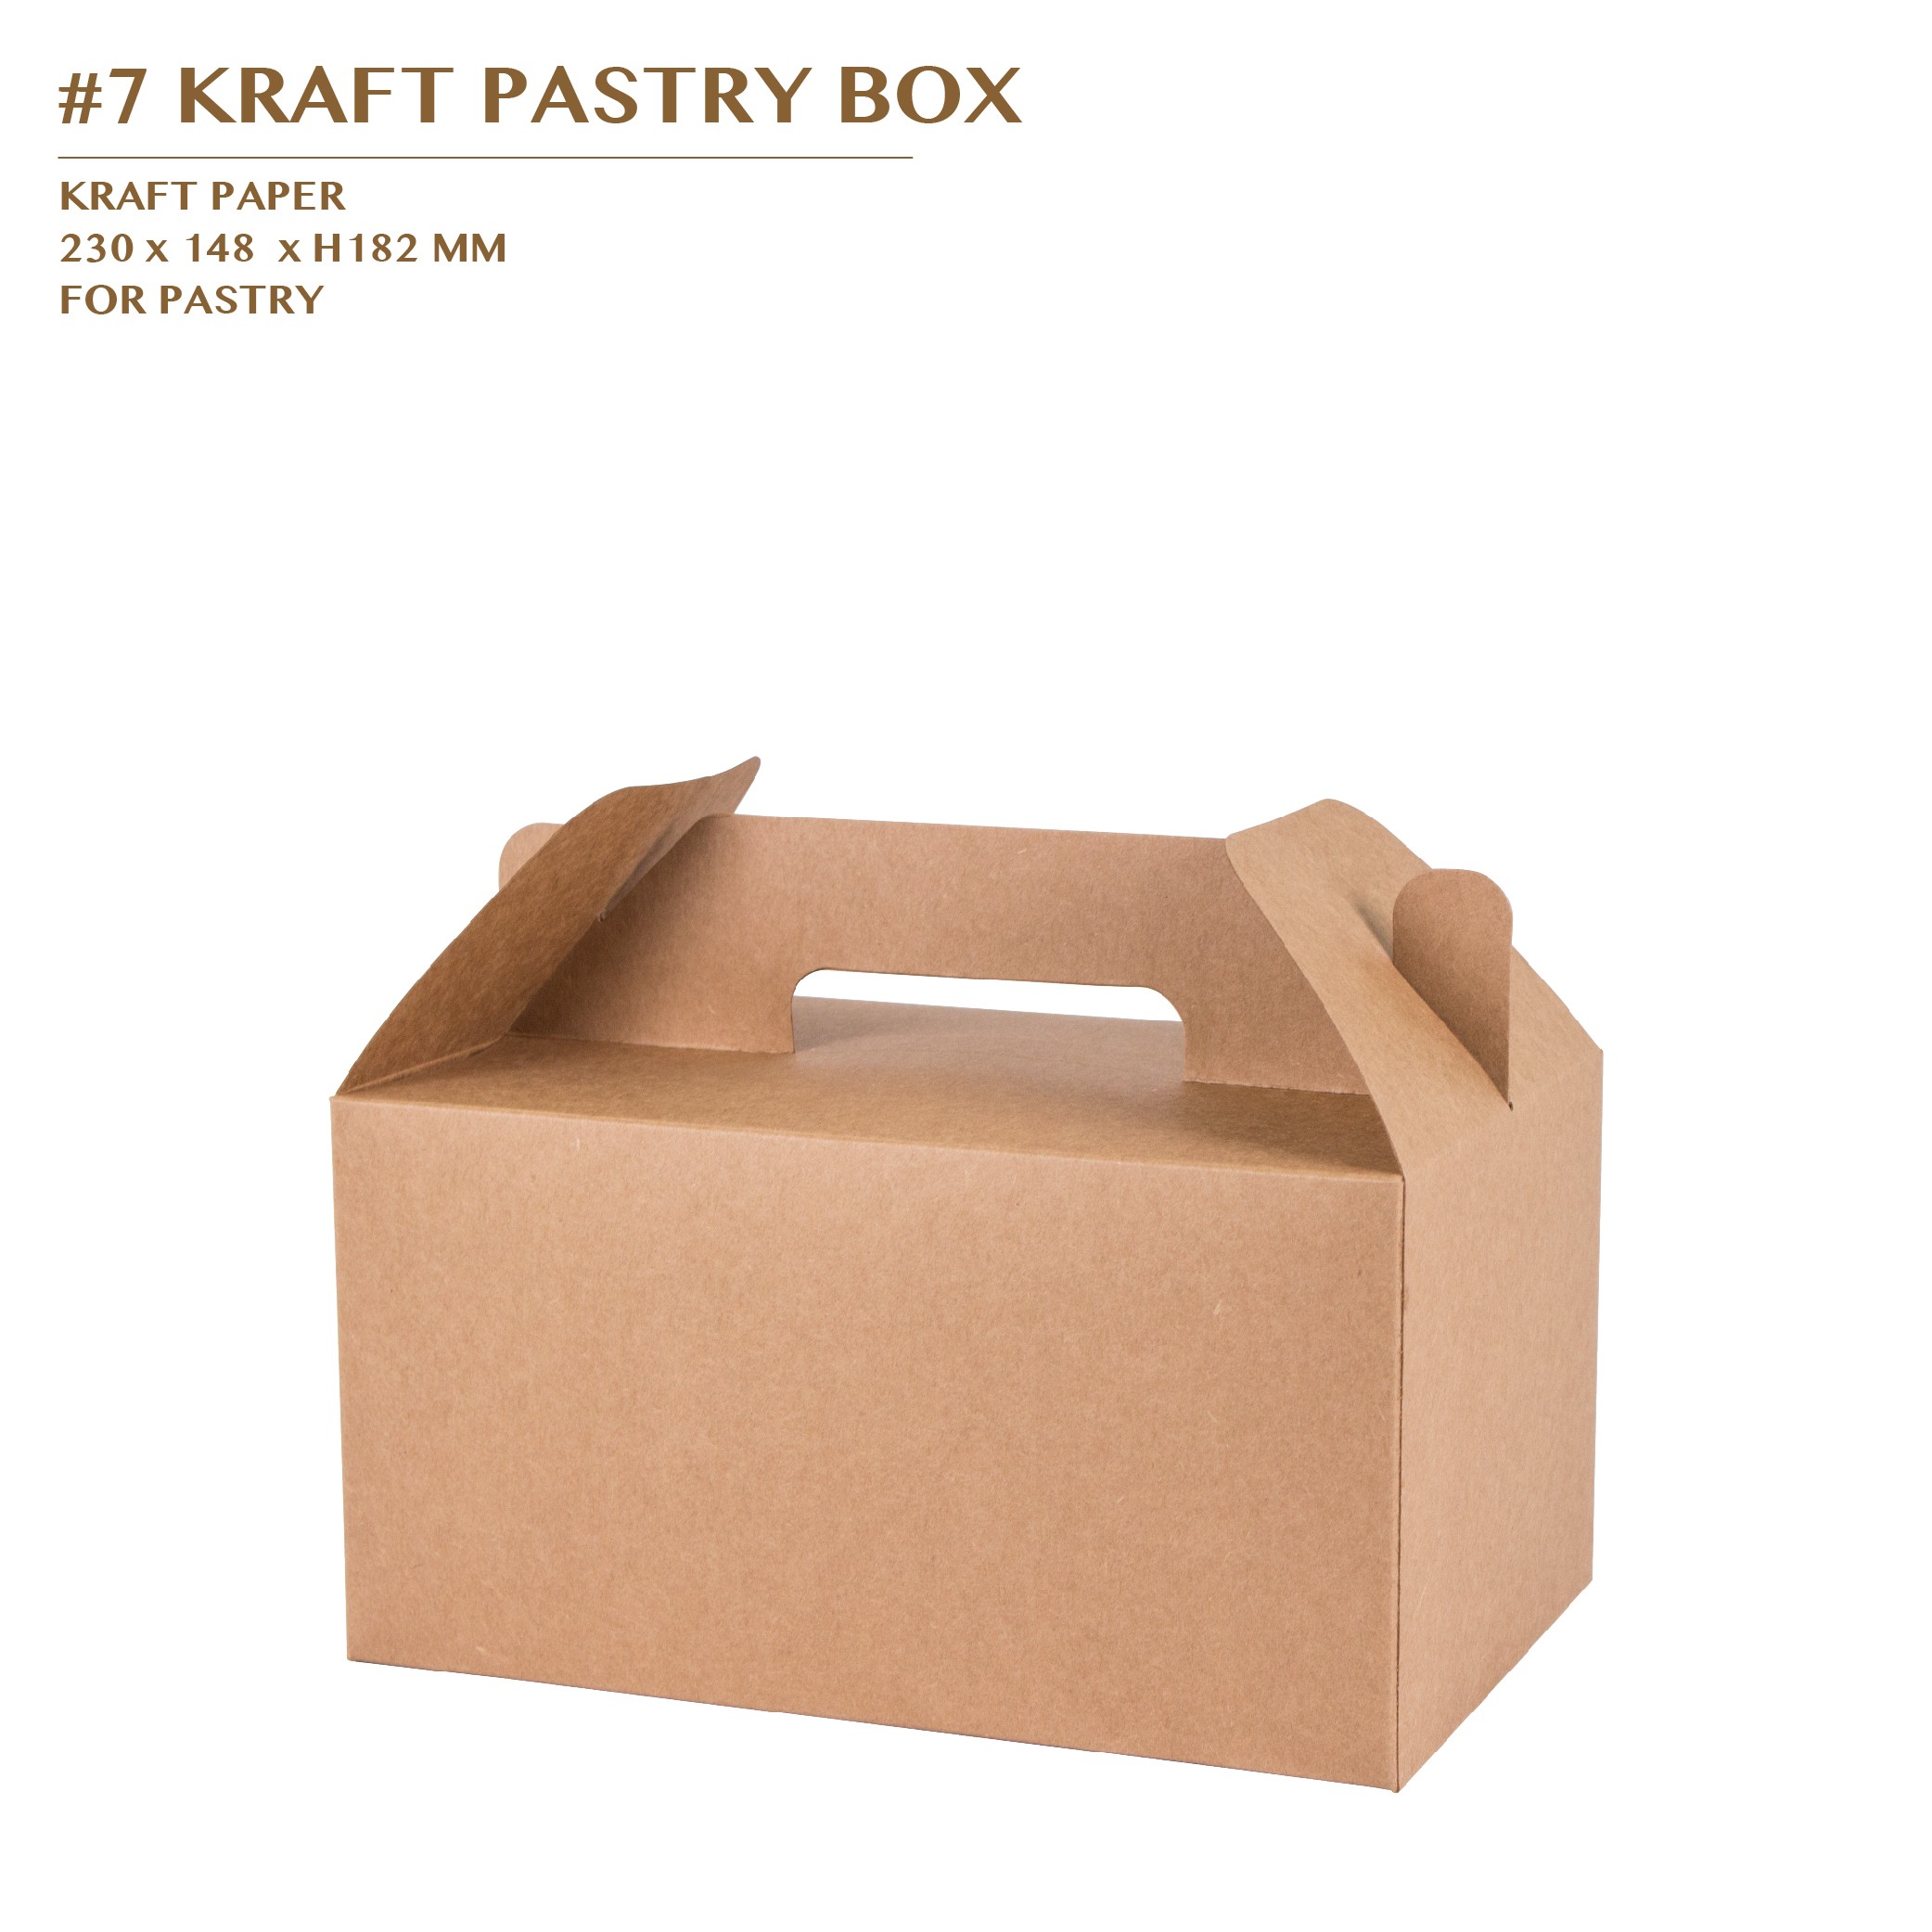 PRE-ORDER #7 KRAFT PASTRY BOX